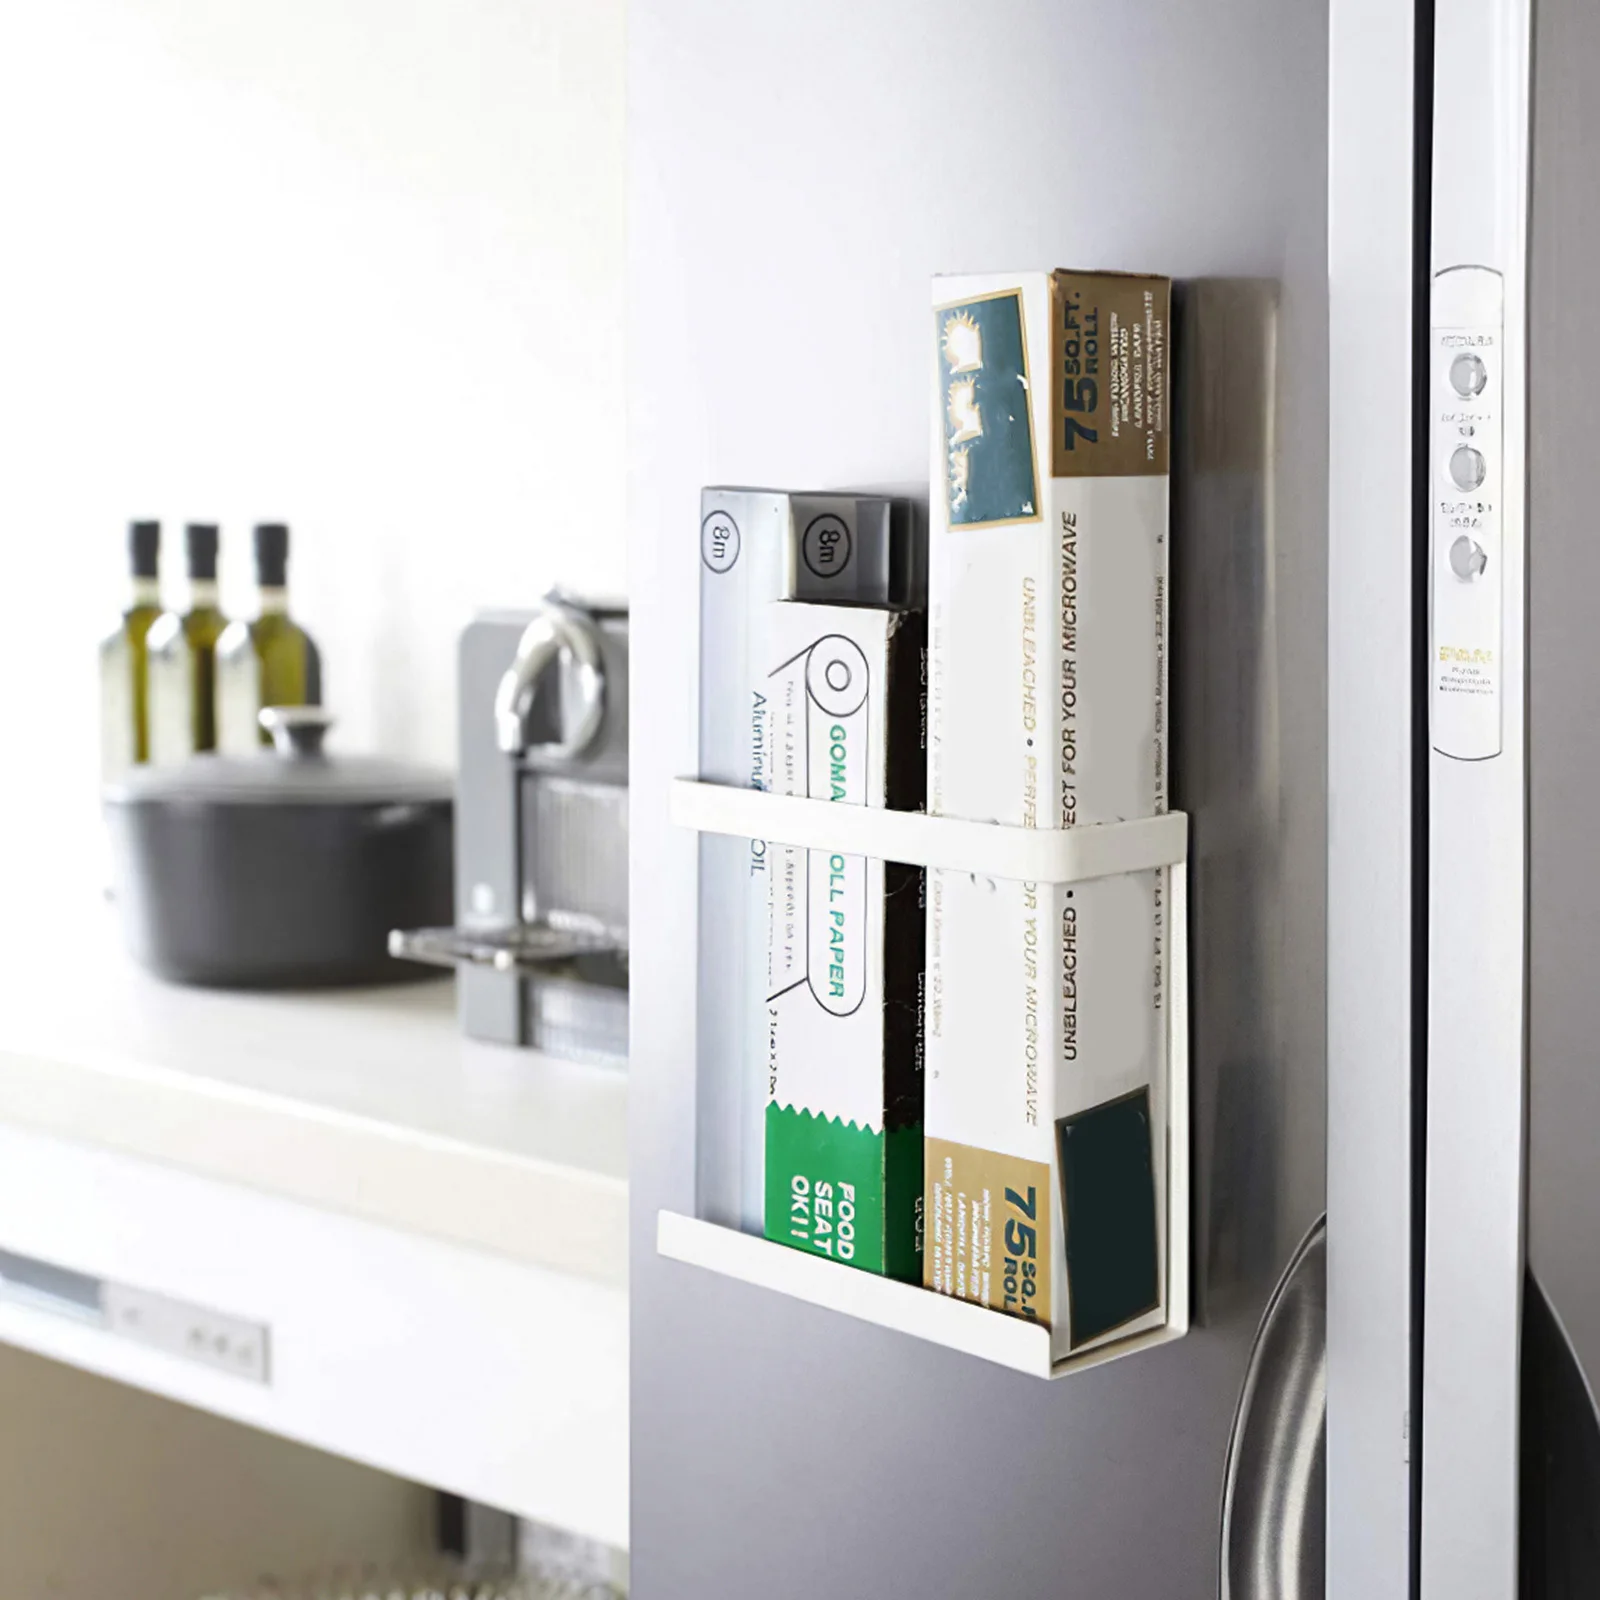 

Durable Magnetic Spice Rack For Refrigerator Kitchen Cling Film Storage Shelf Fridge Side Hanging Organizer Shelves For Home